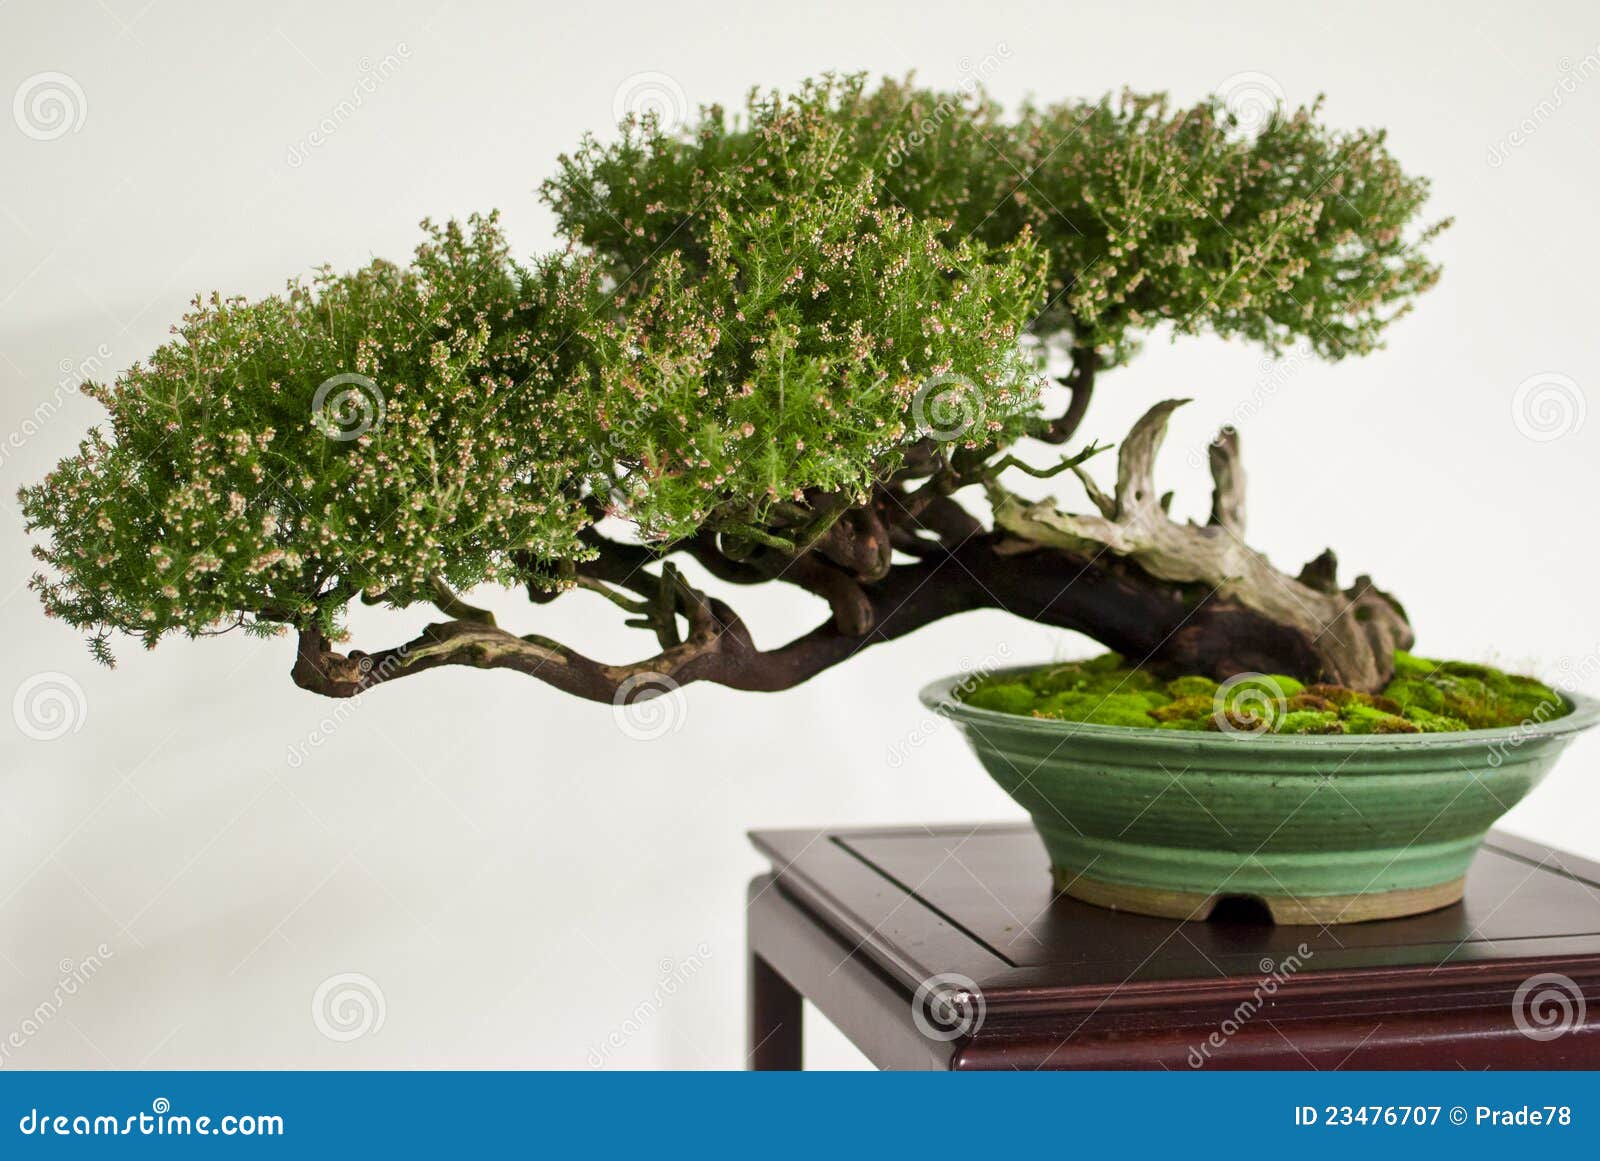 fascinating bonsai in vase